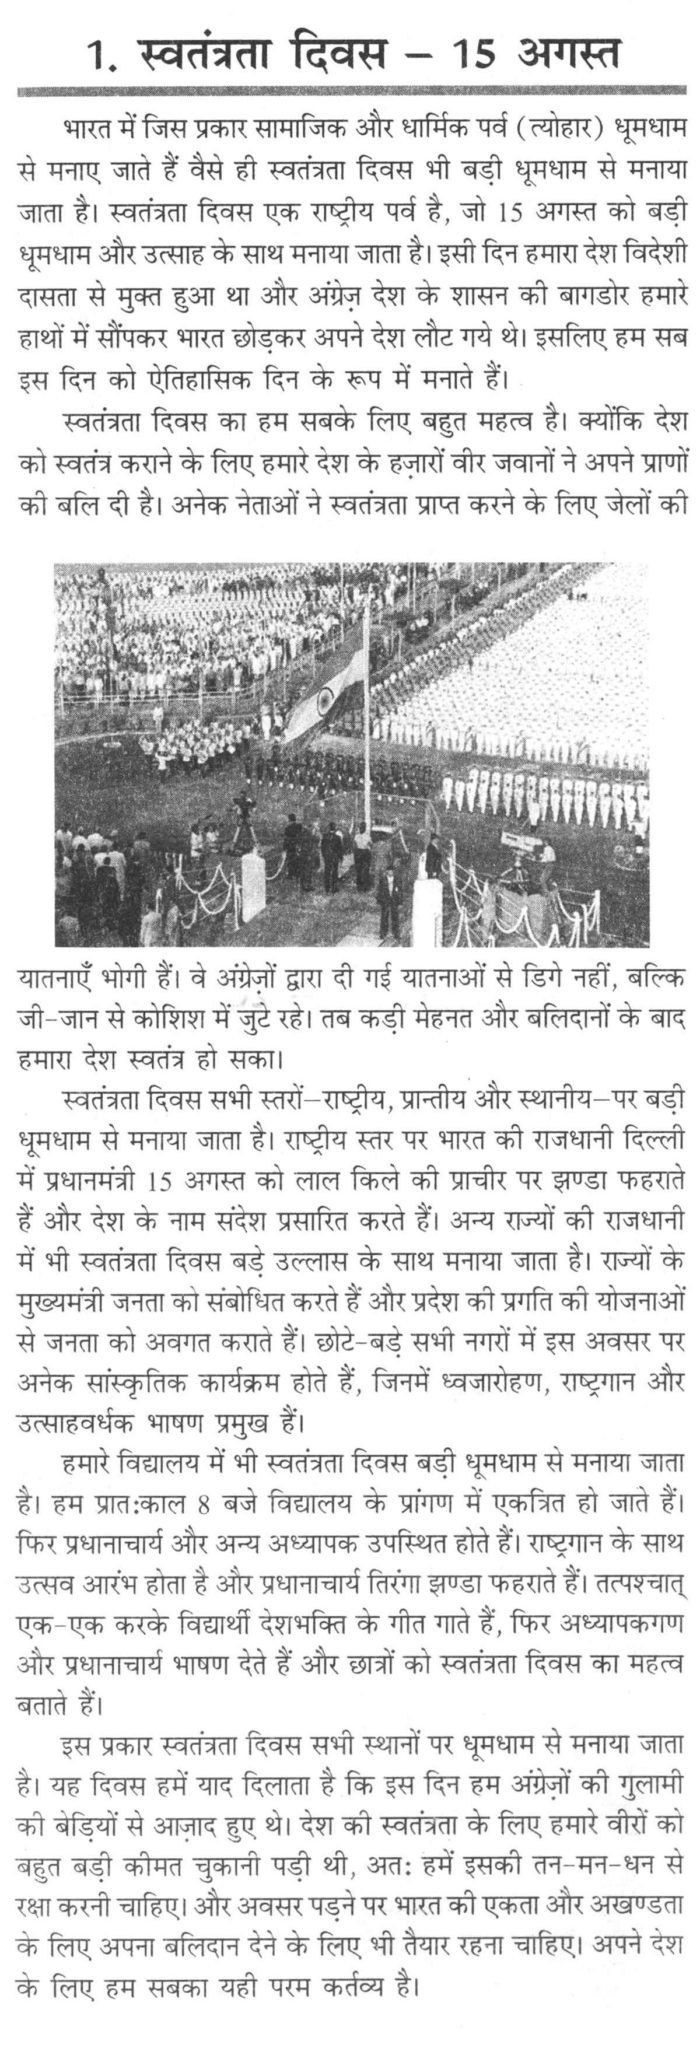 Swatantrata Diwas Par Bhashan - Hindi Speech For Independence Day - HD Wallpaper 